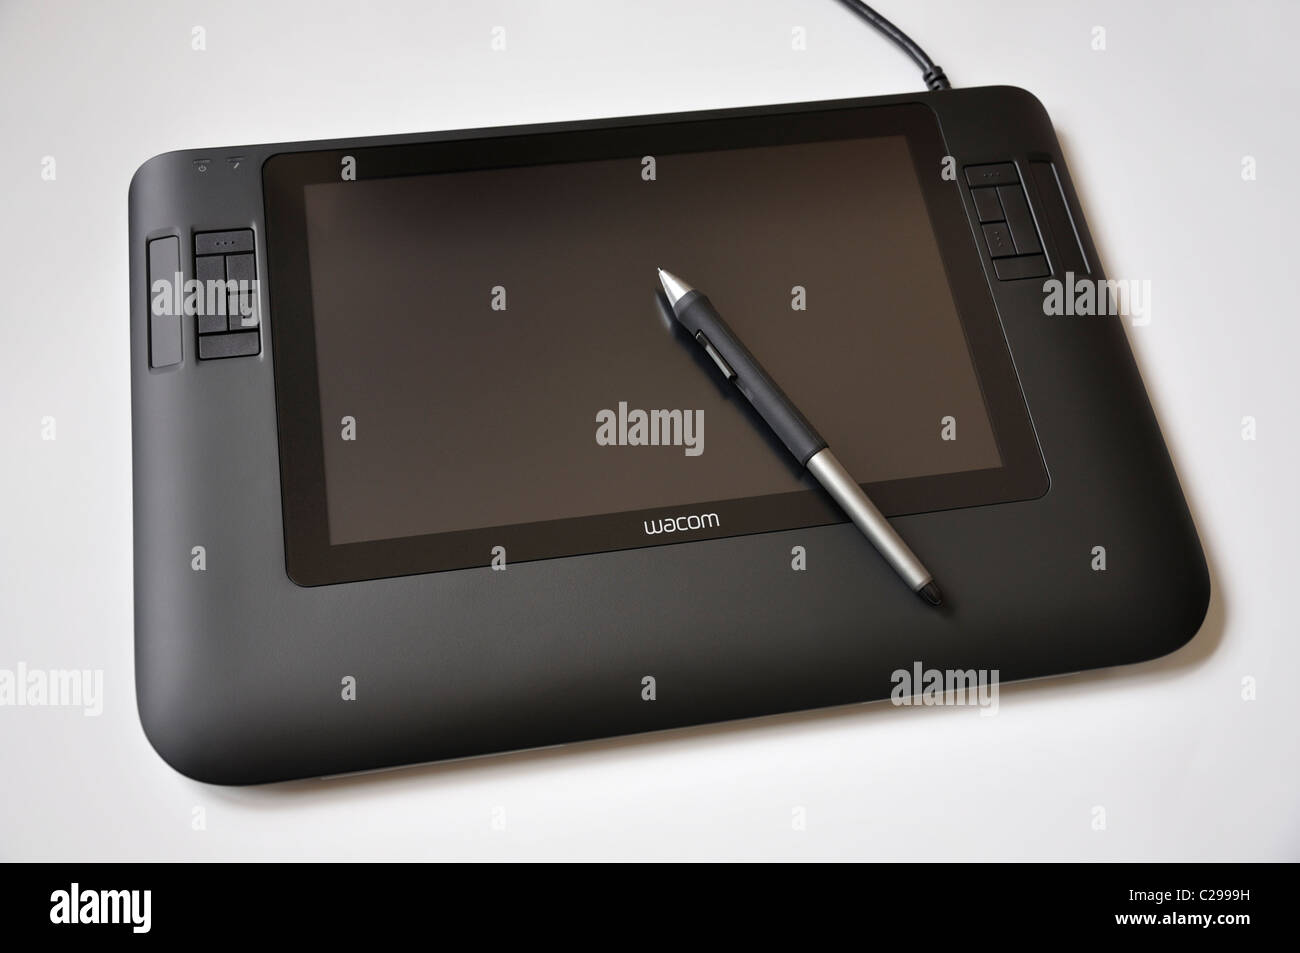 WACOM - Tablette graphique Cintiq 13HD